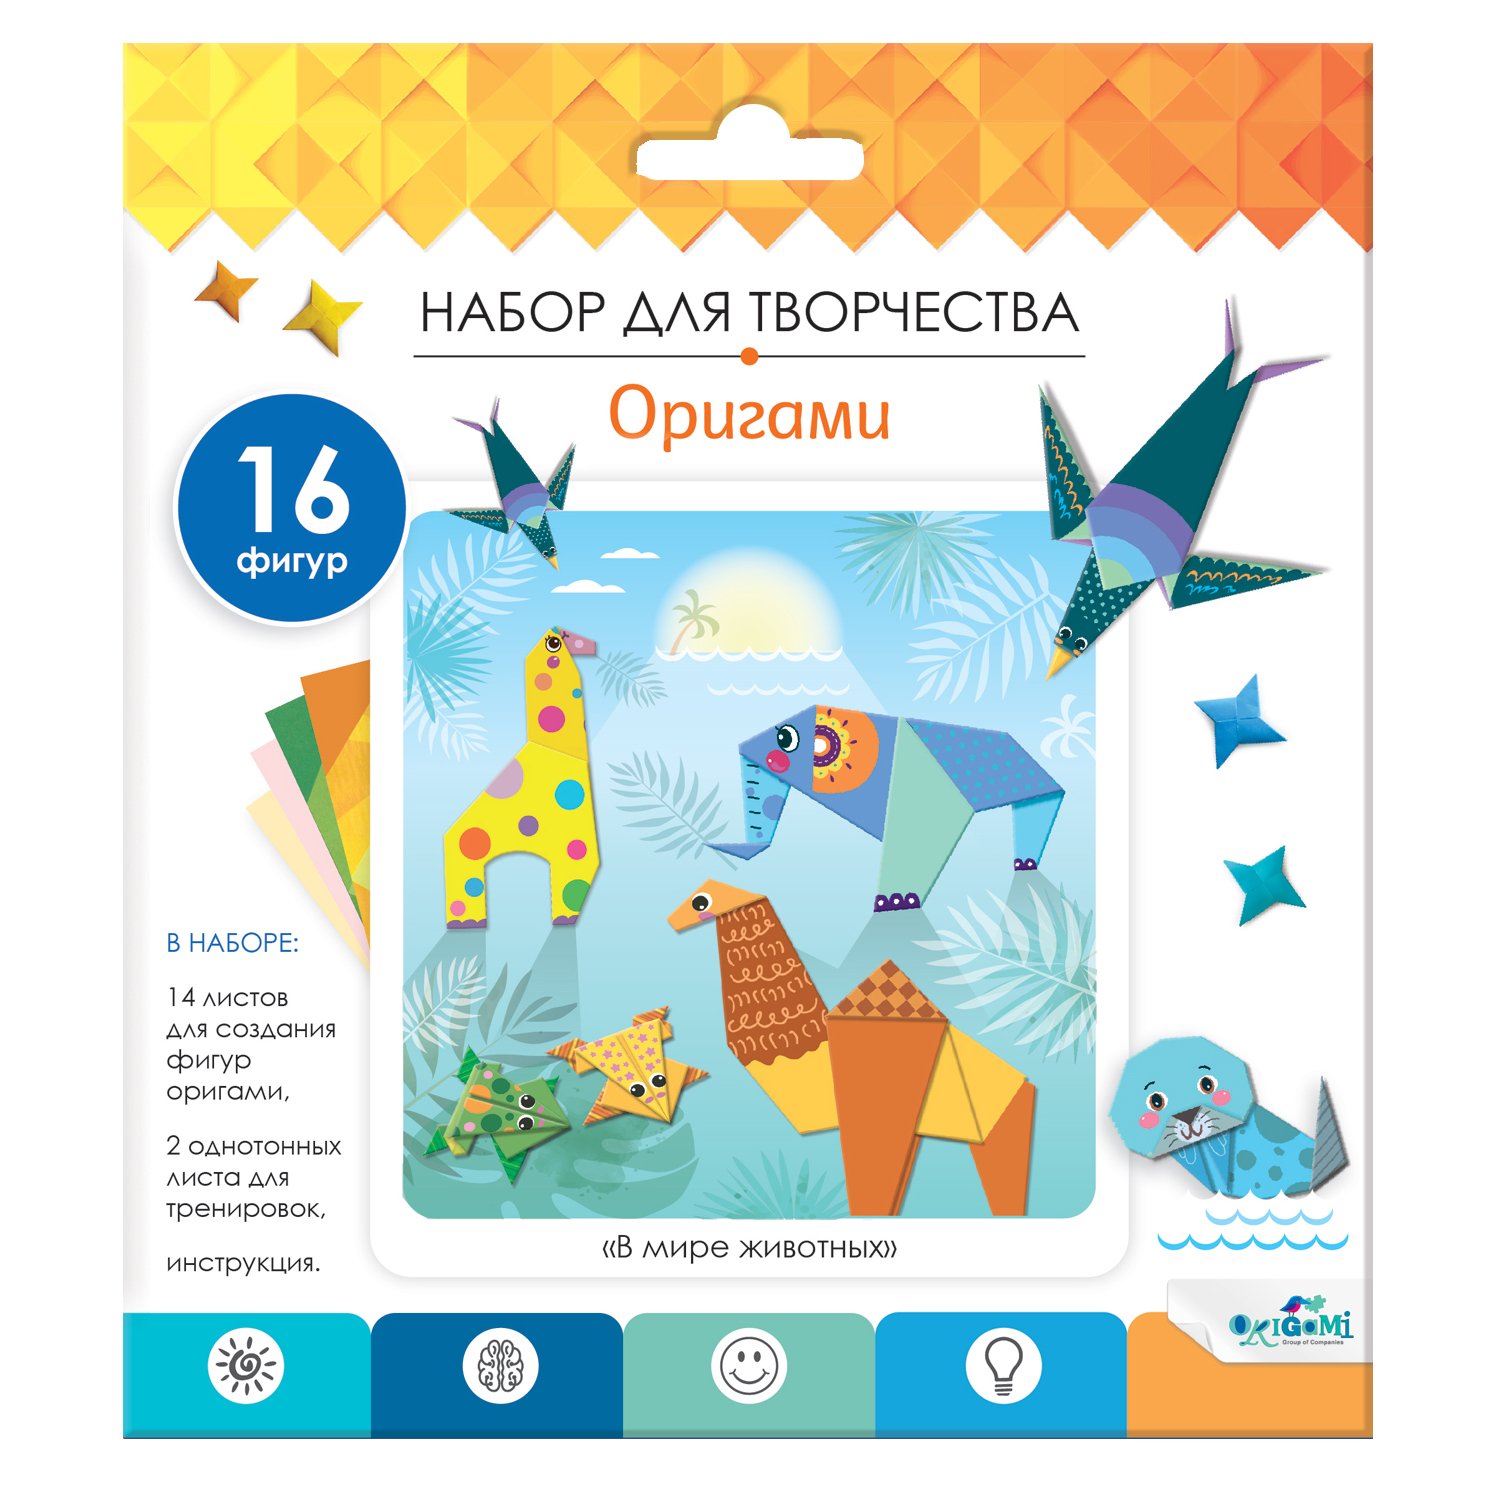 Оригами перчатка (46 фото) » Идеи поделок и аппликаций своими руками - natali-fashion.ru